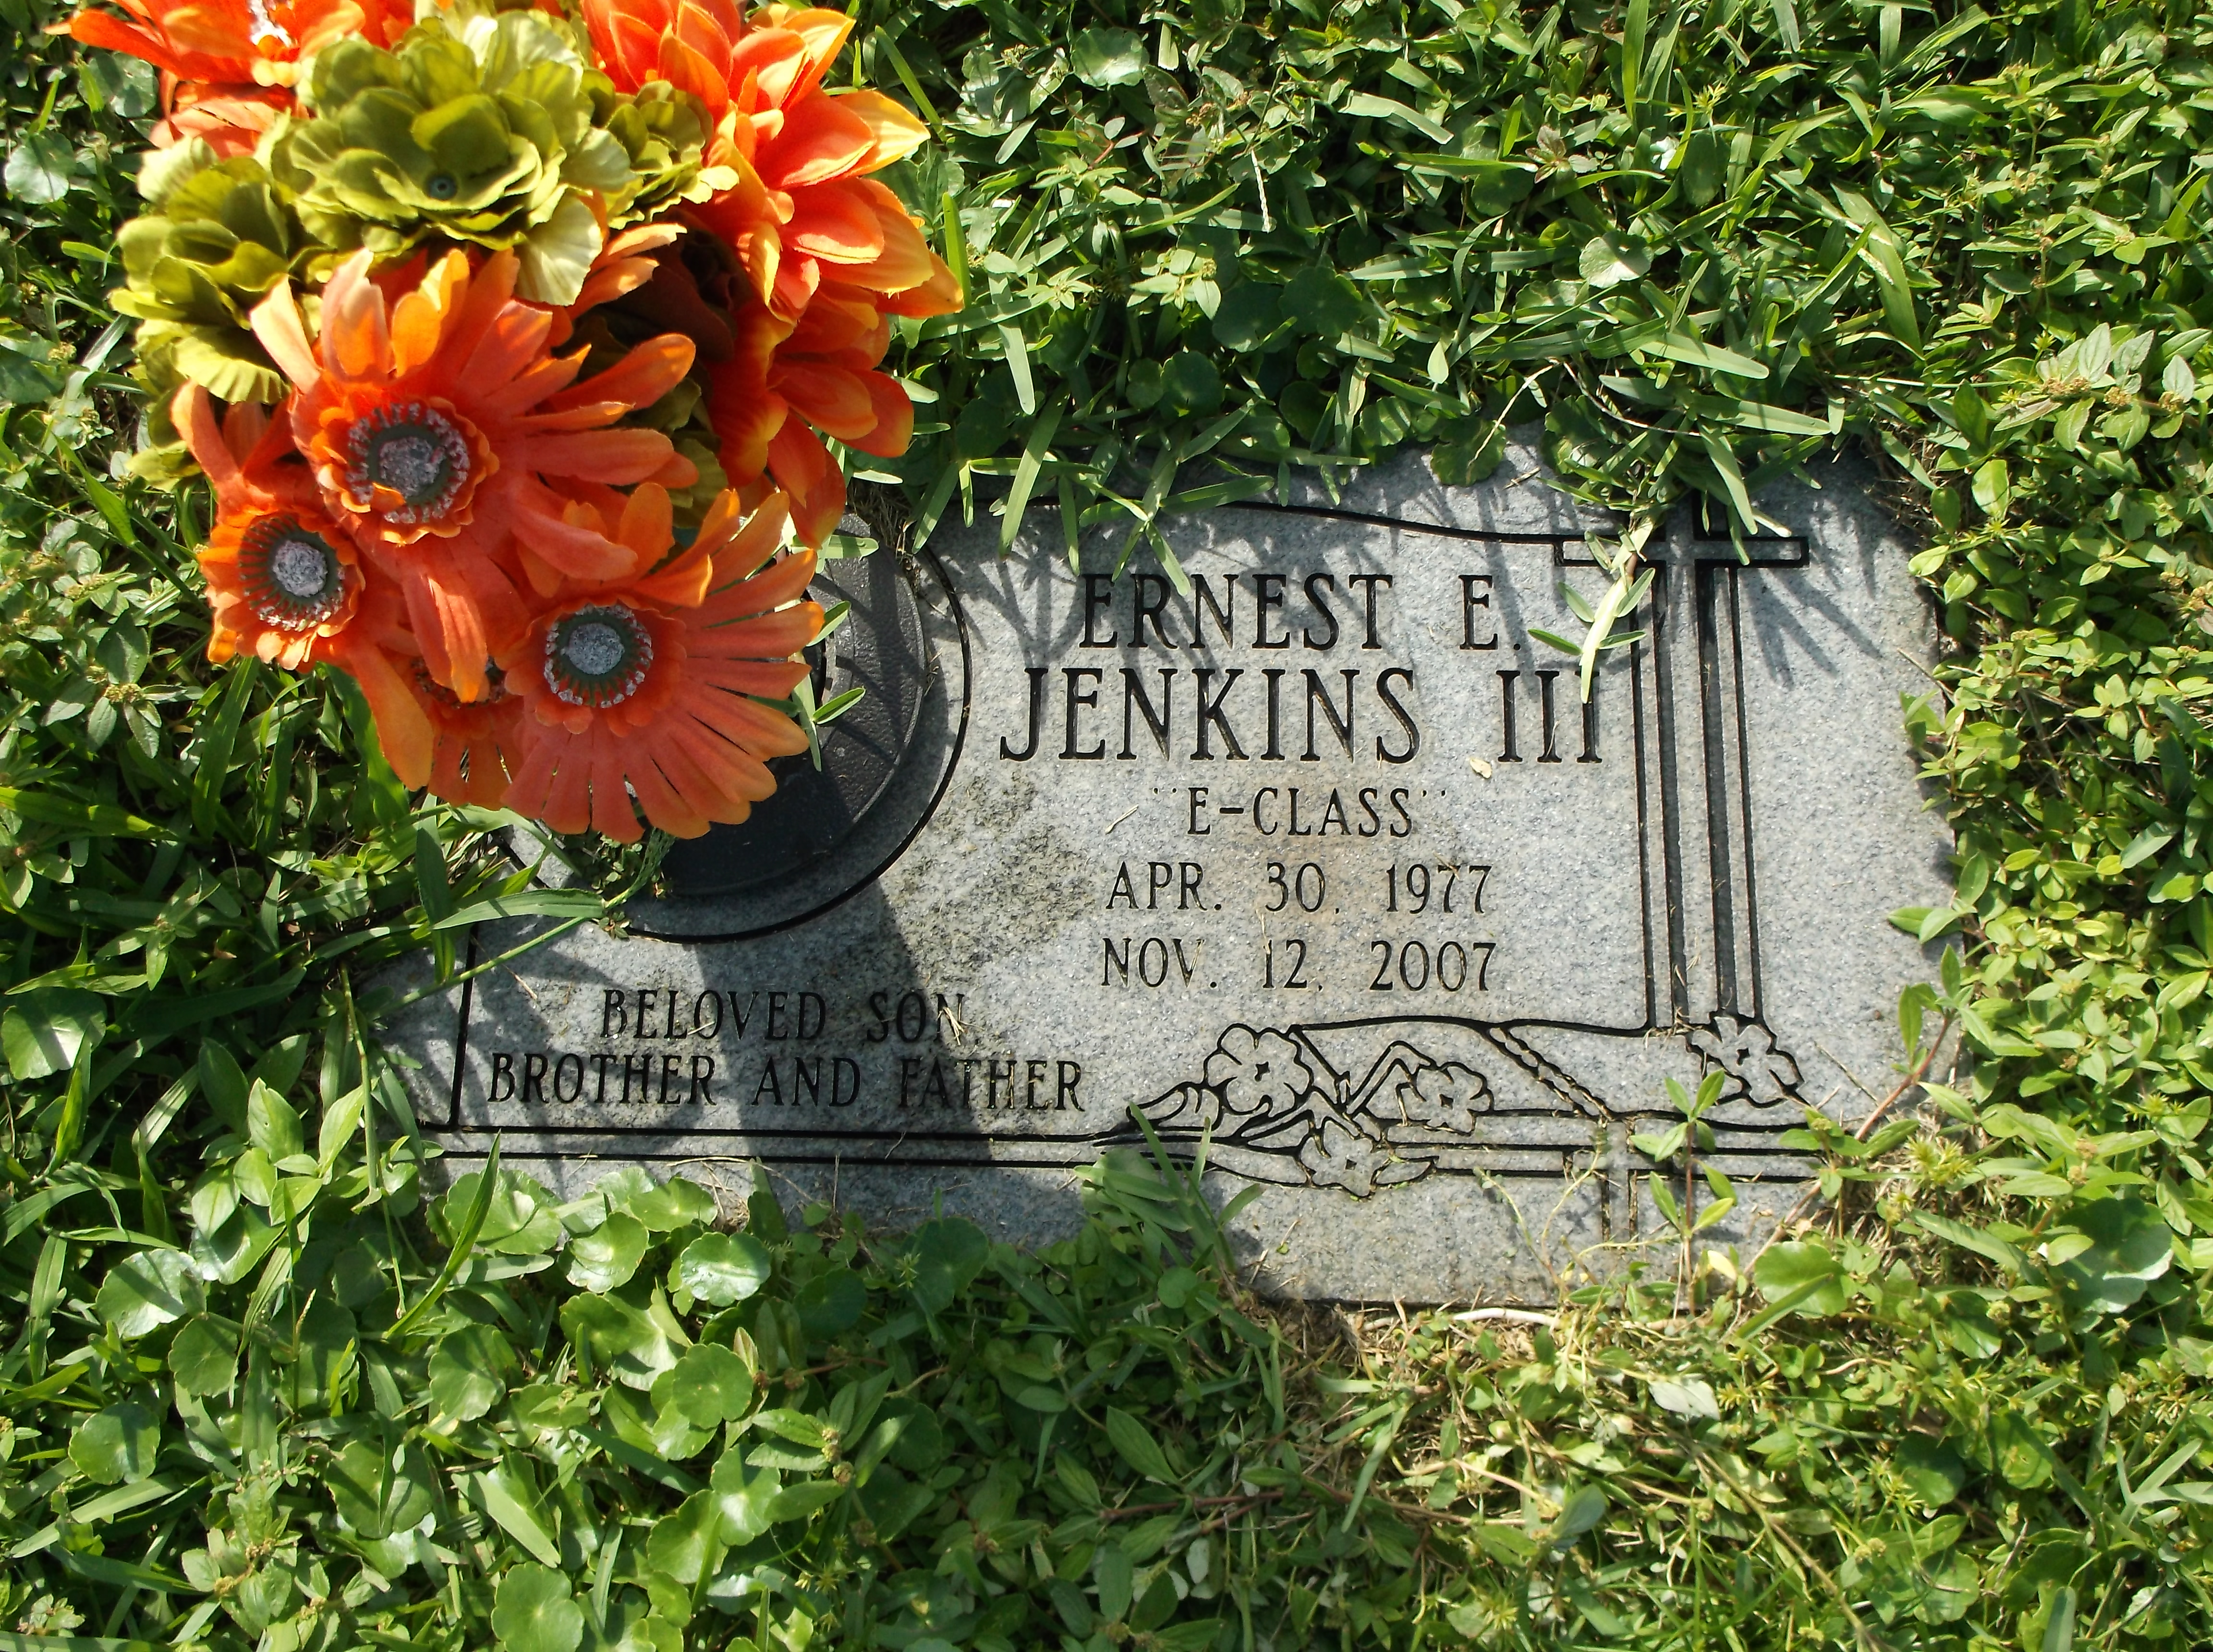 Ernest E Jenkins, III